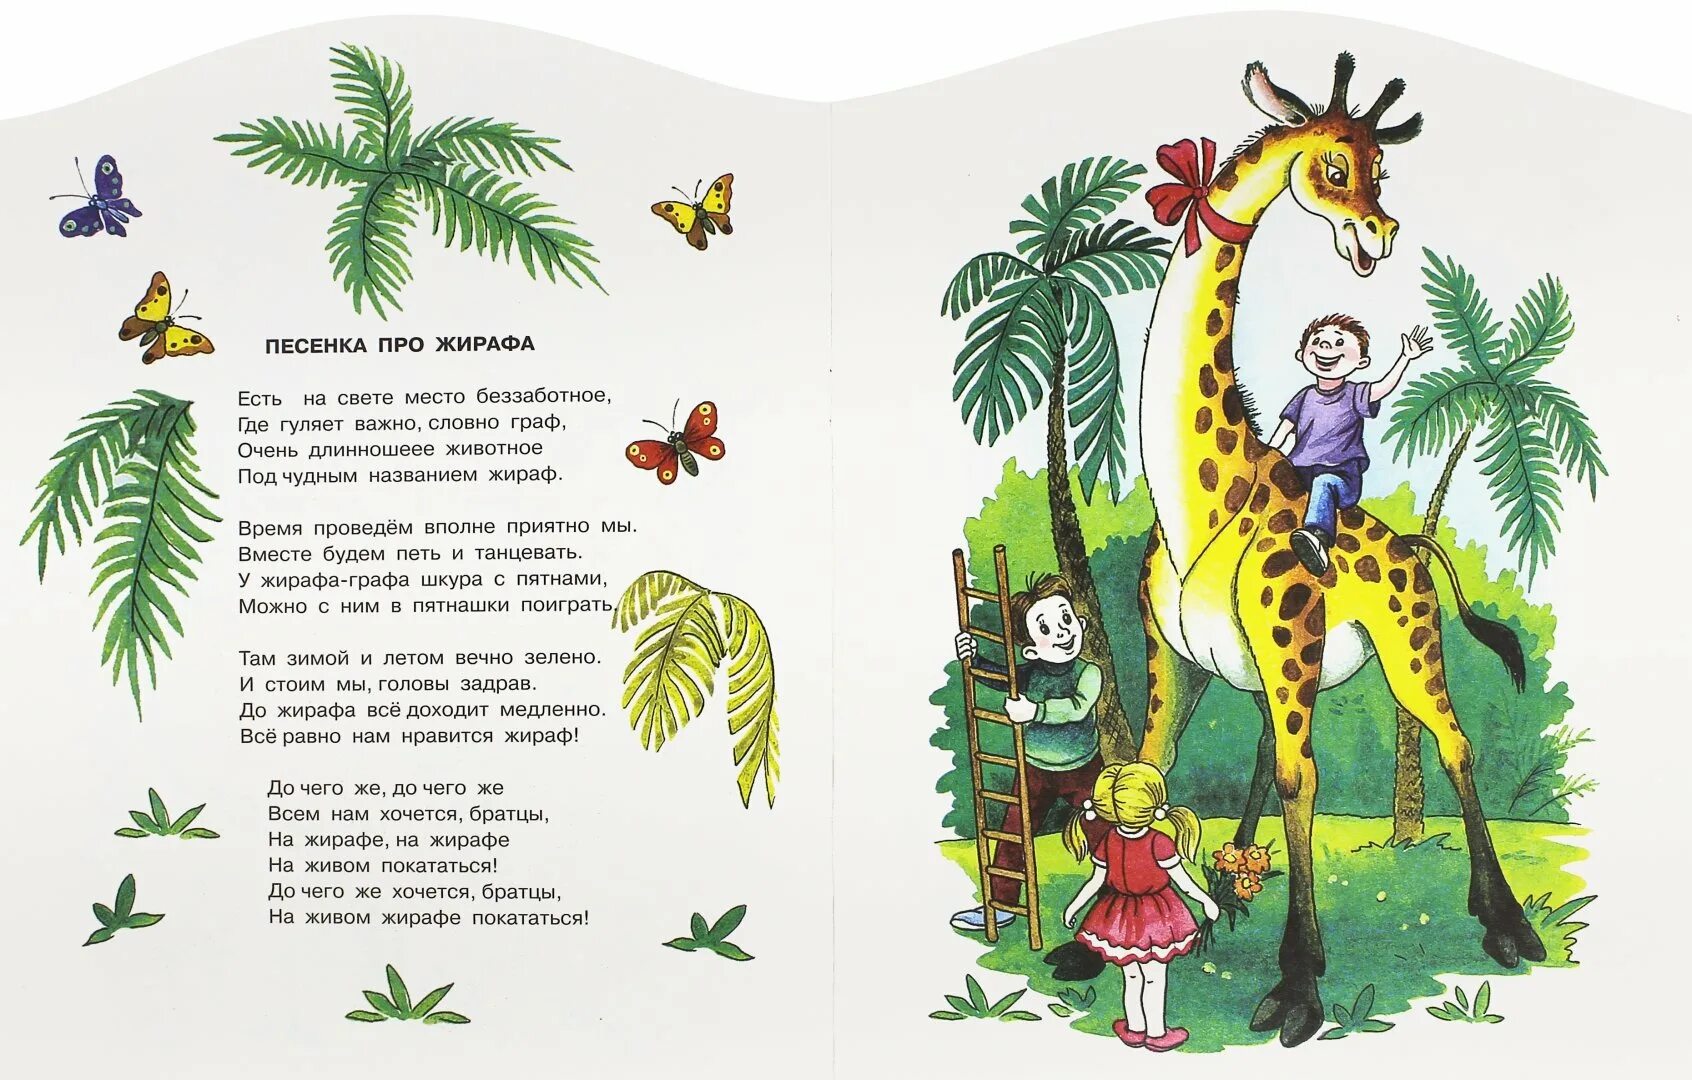 Песенка про 7 лет. Детские стишки про животных. Стихотворение про жирафа. Детские стихи про жирафа. Песенка о жирафе.